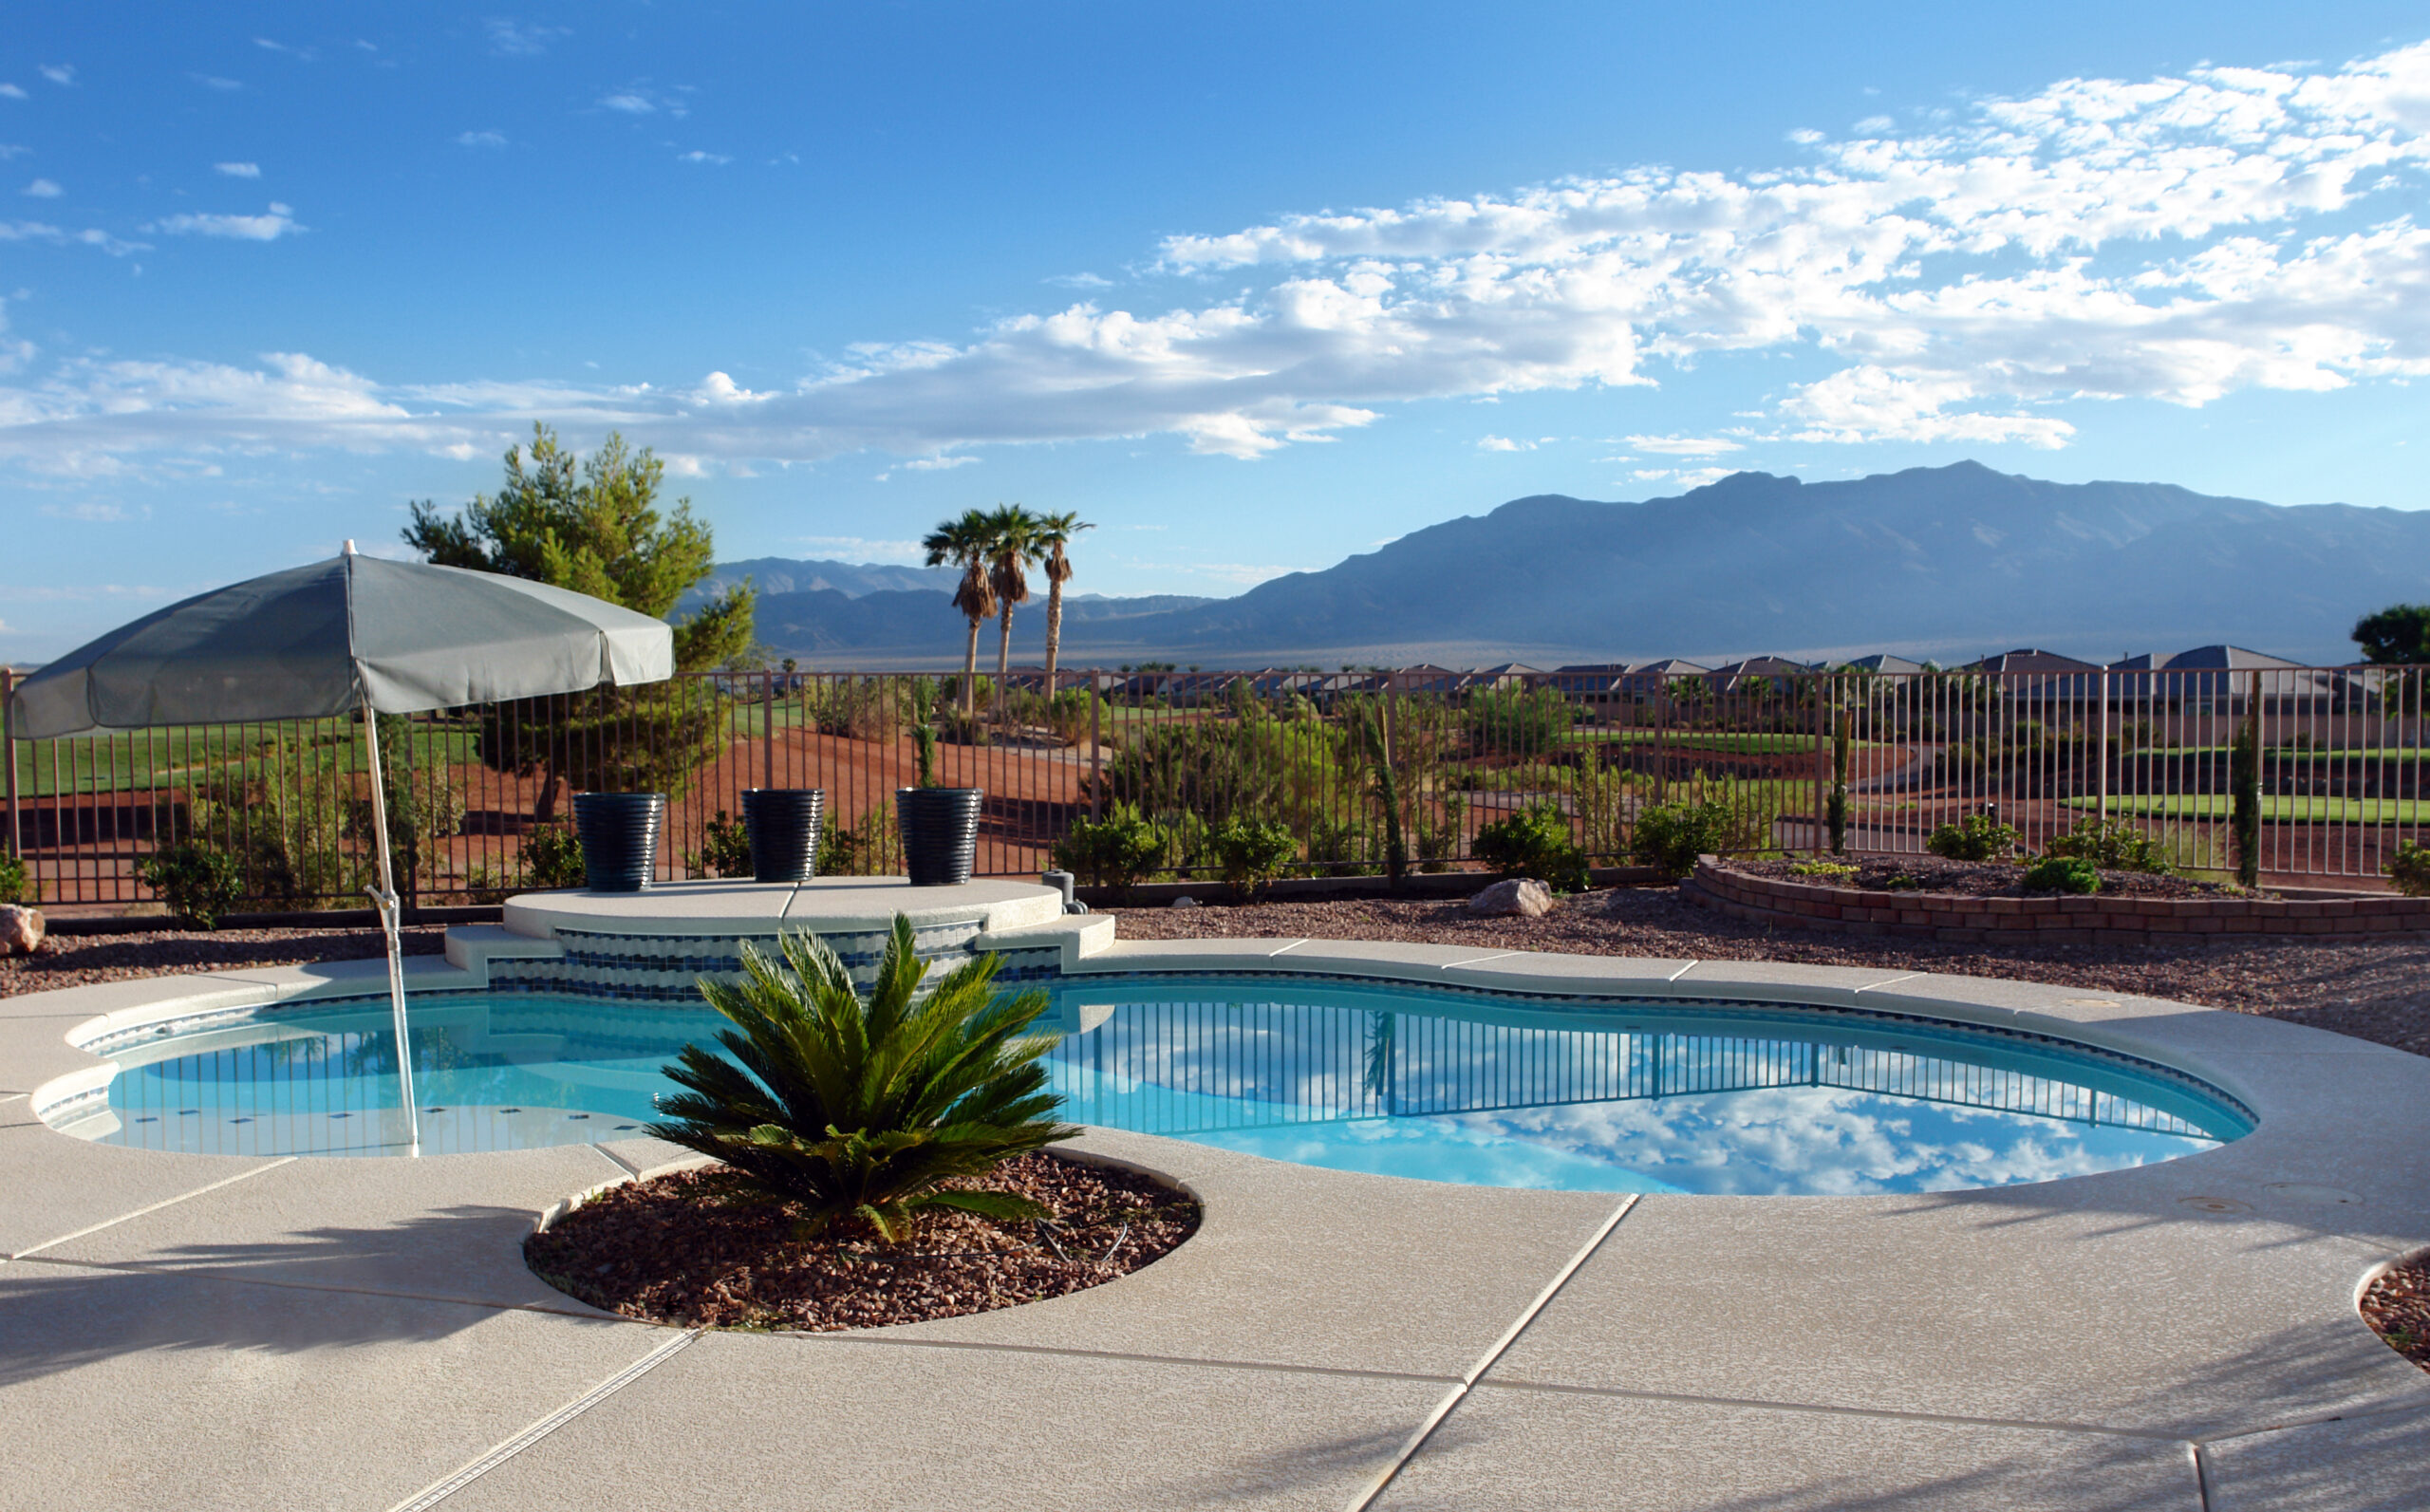 A pool designed with desert aesthetics